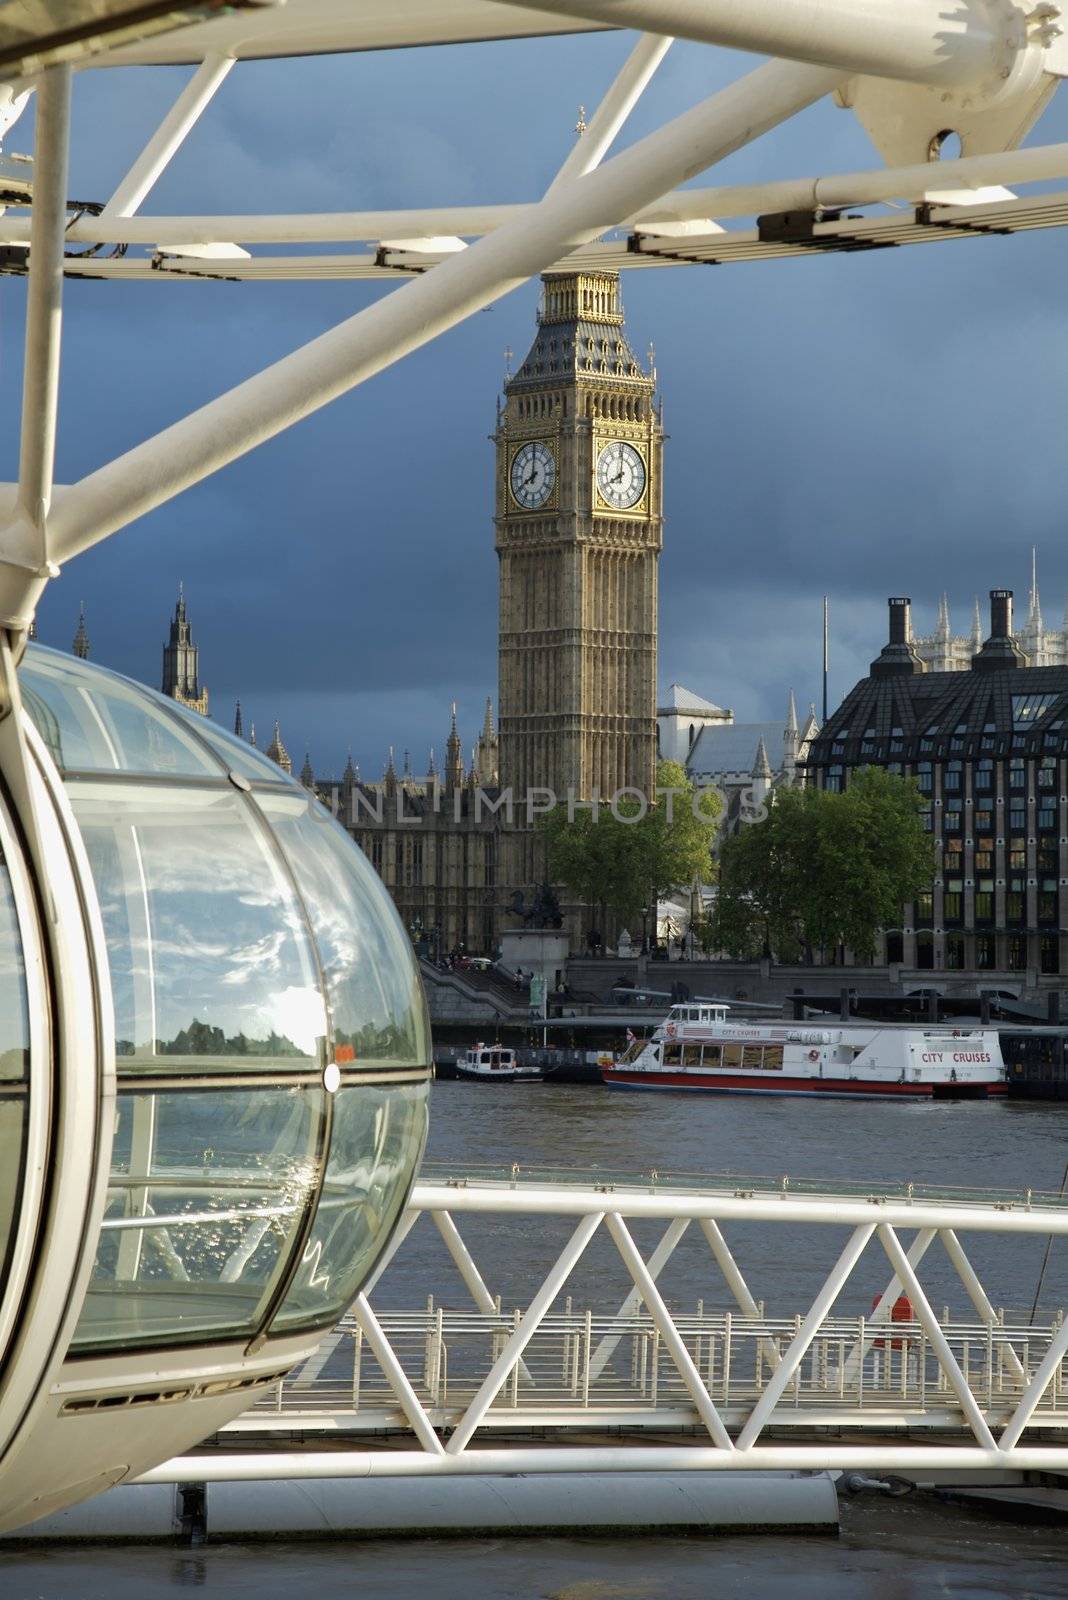 London Eye skyline with Big Ben and in London, United Kingdom